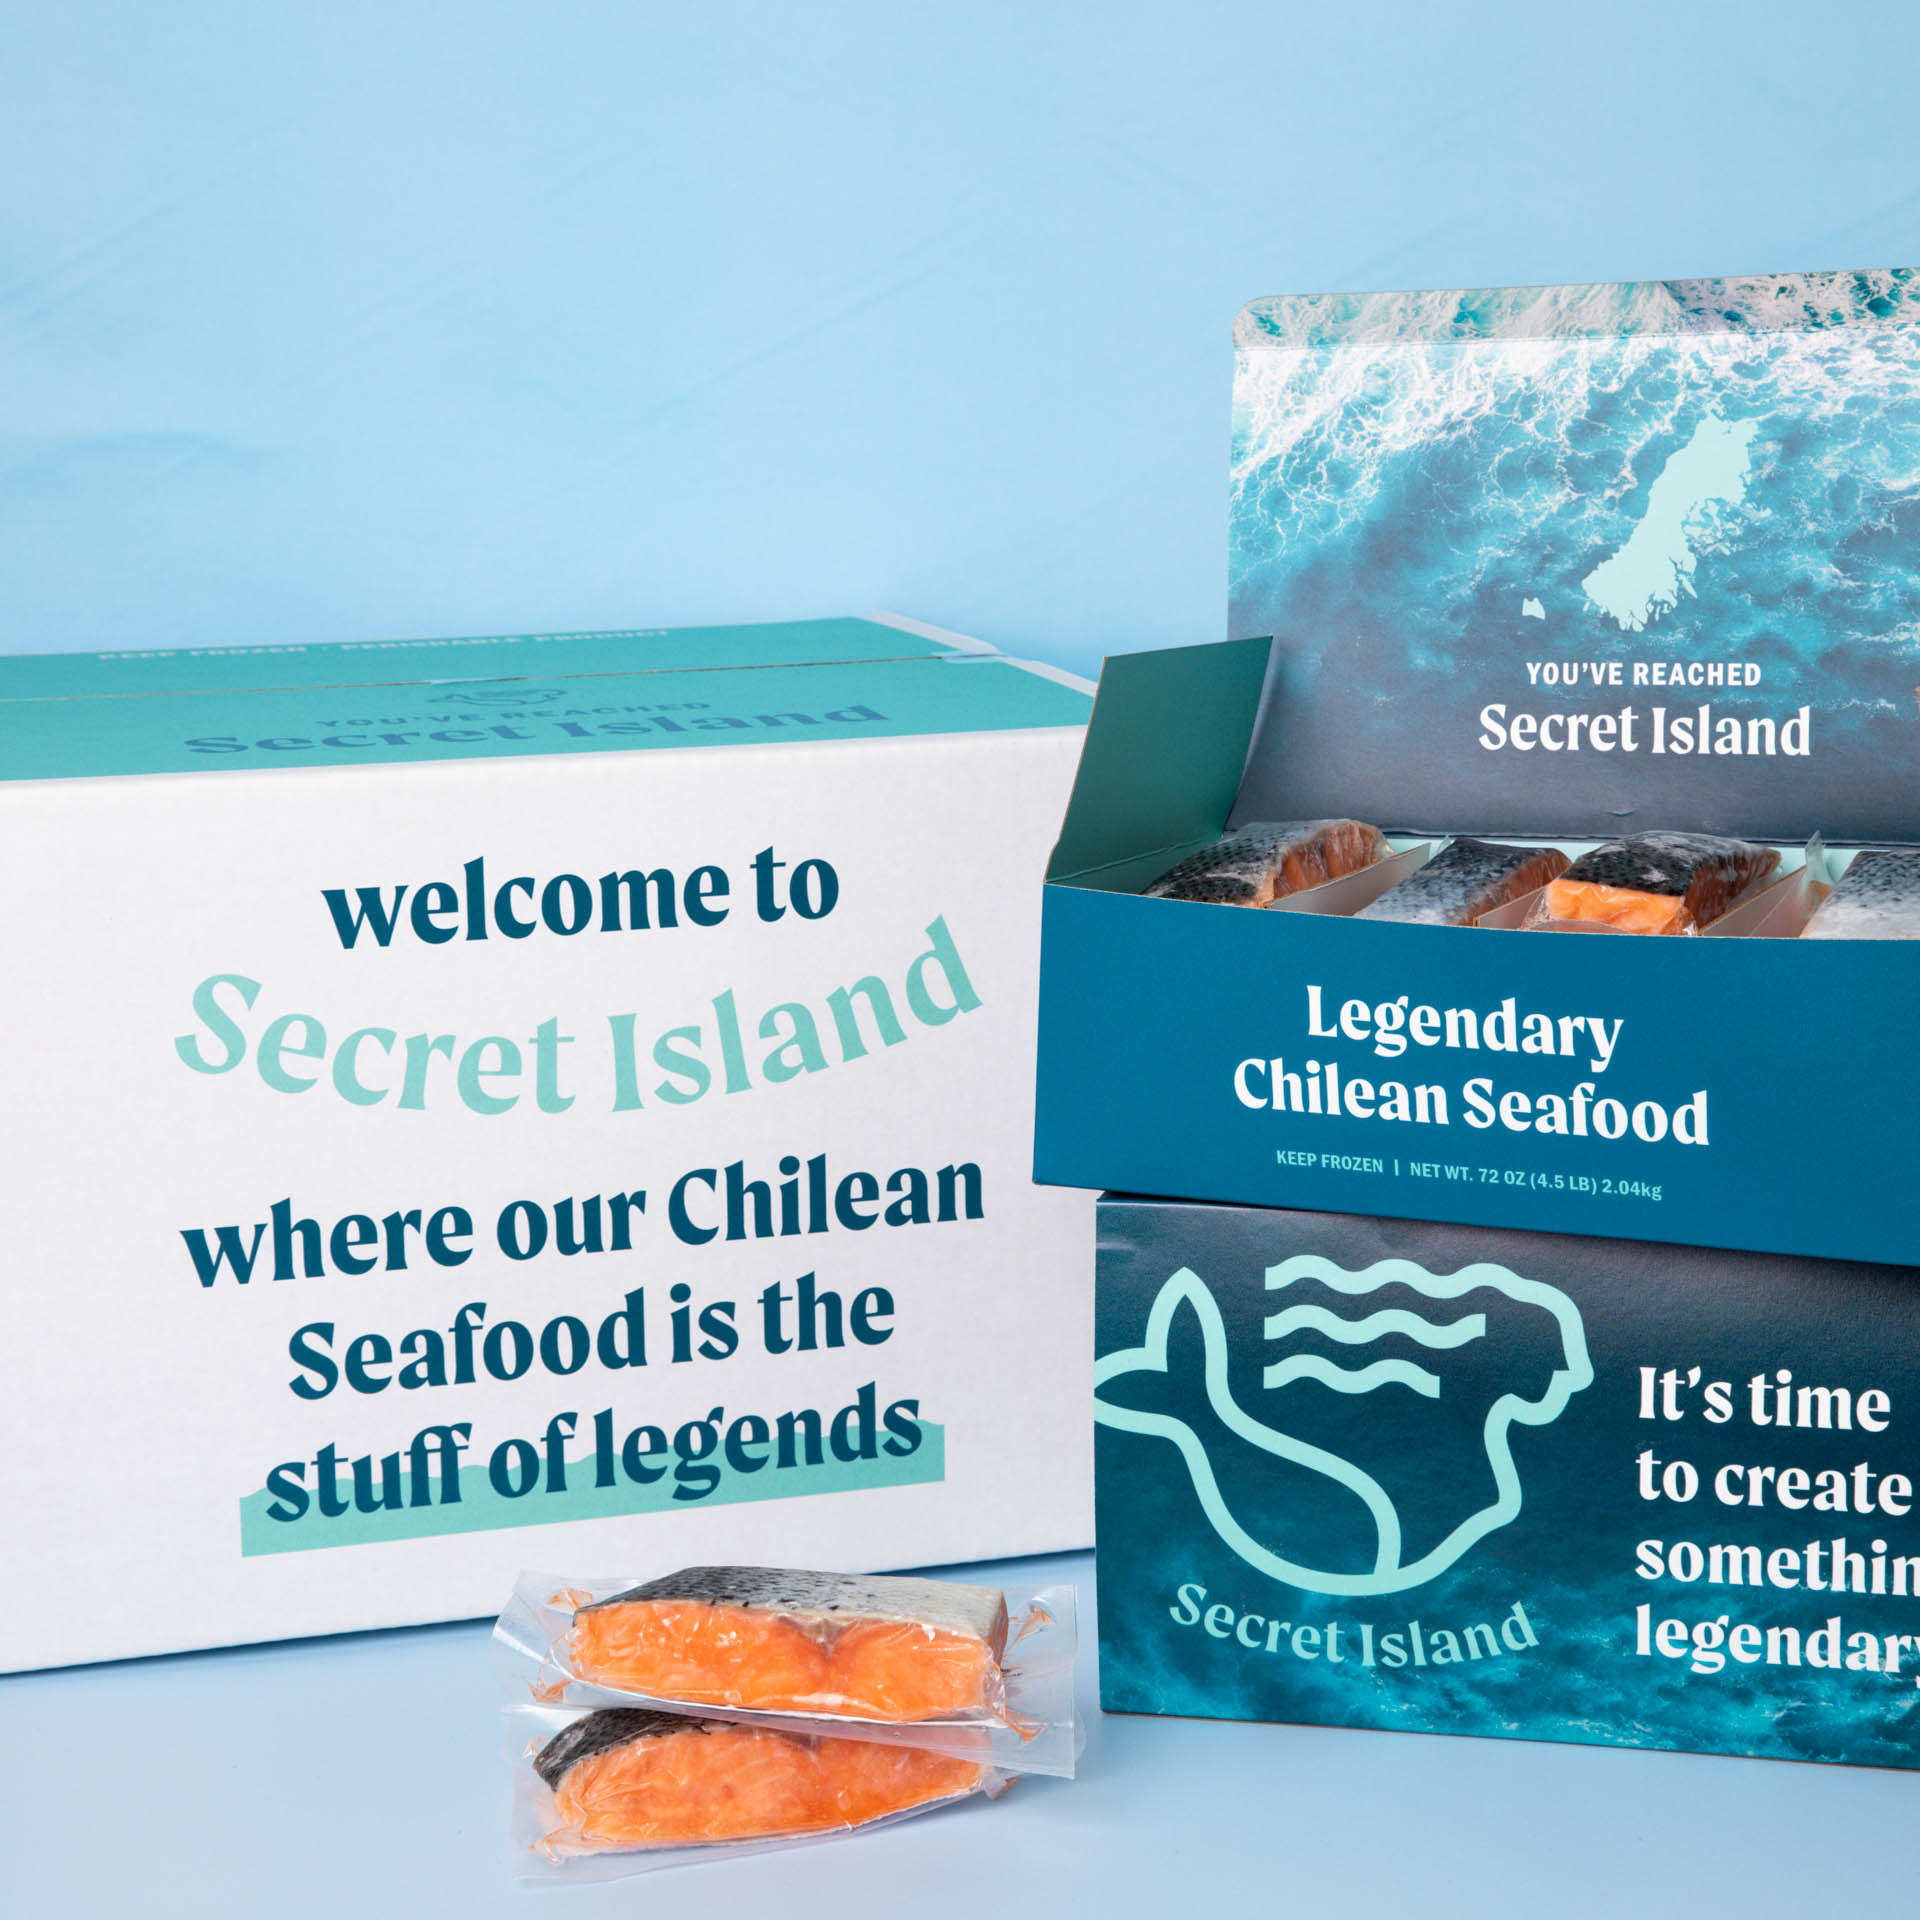 Salmones Austral Unveils Secret Island Brand, Providing Chilean Salmon Doorstep Delivery